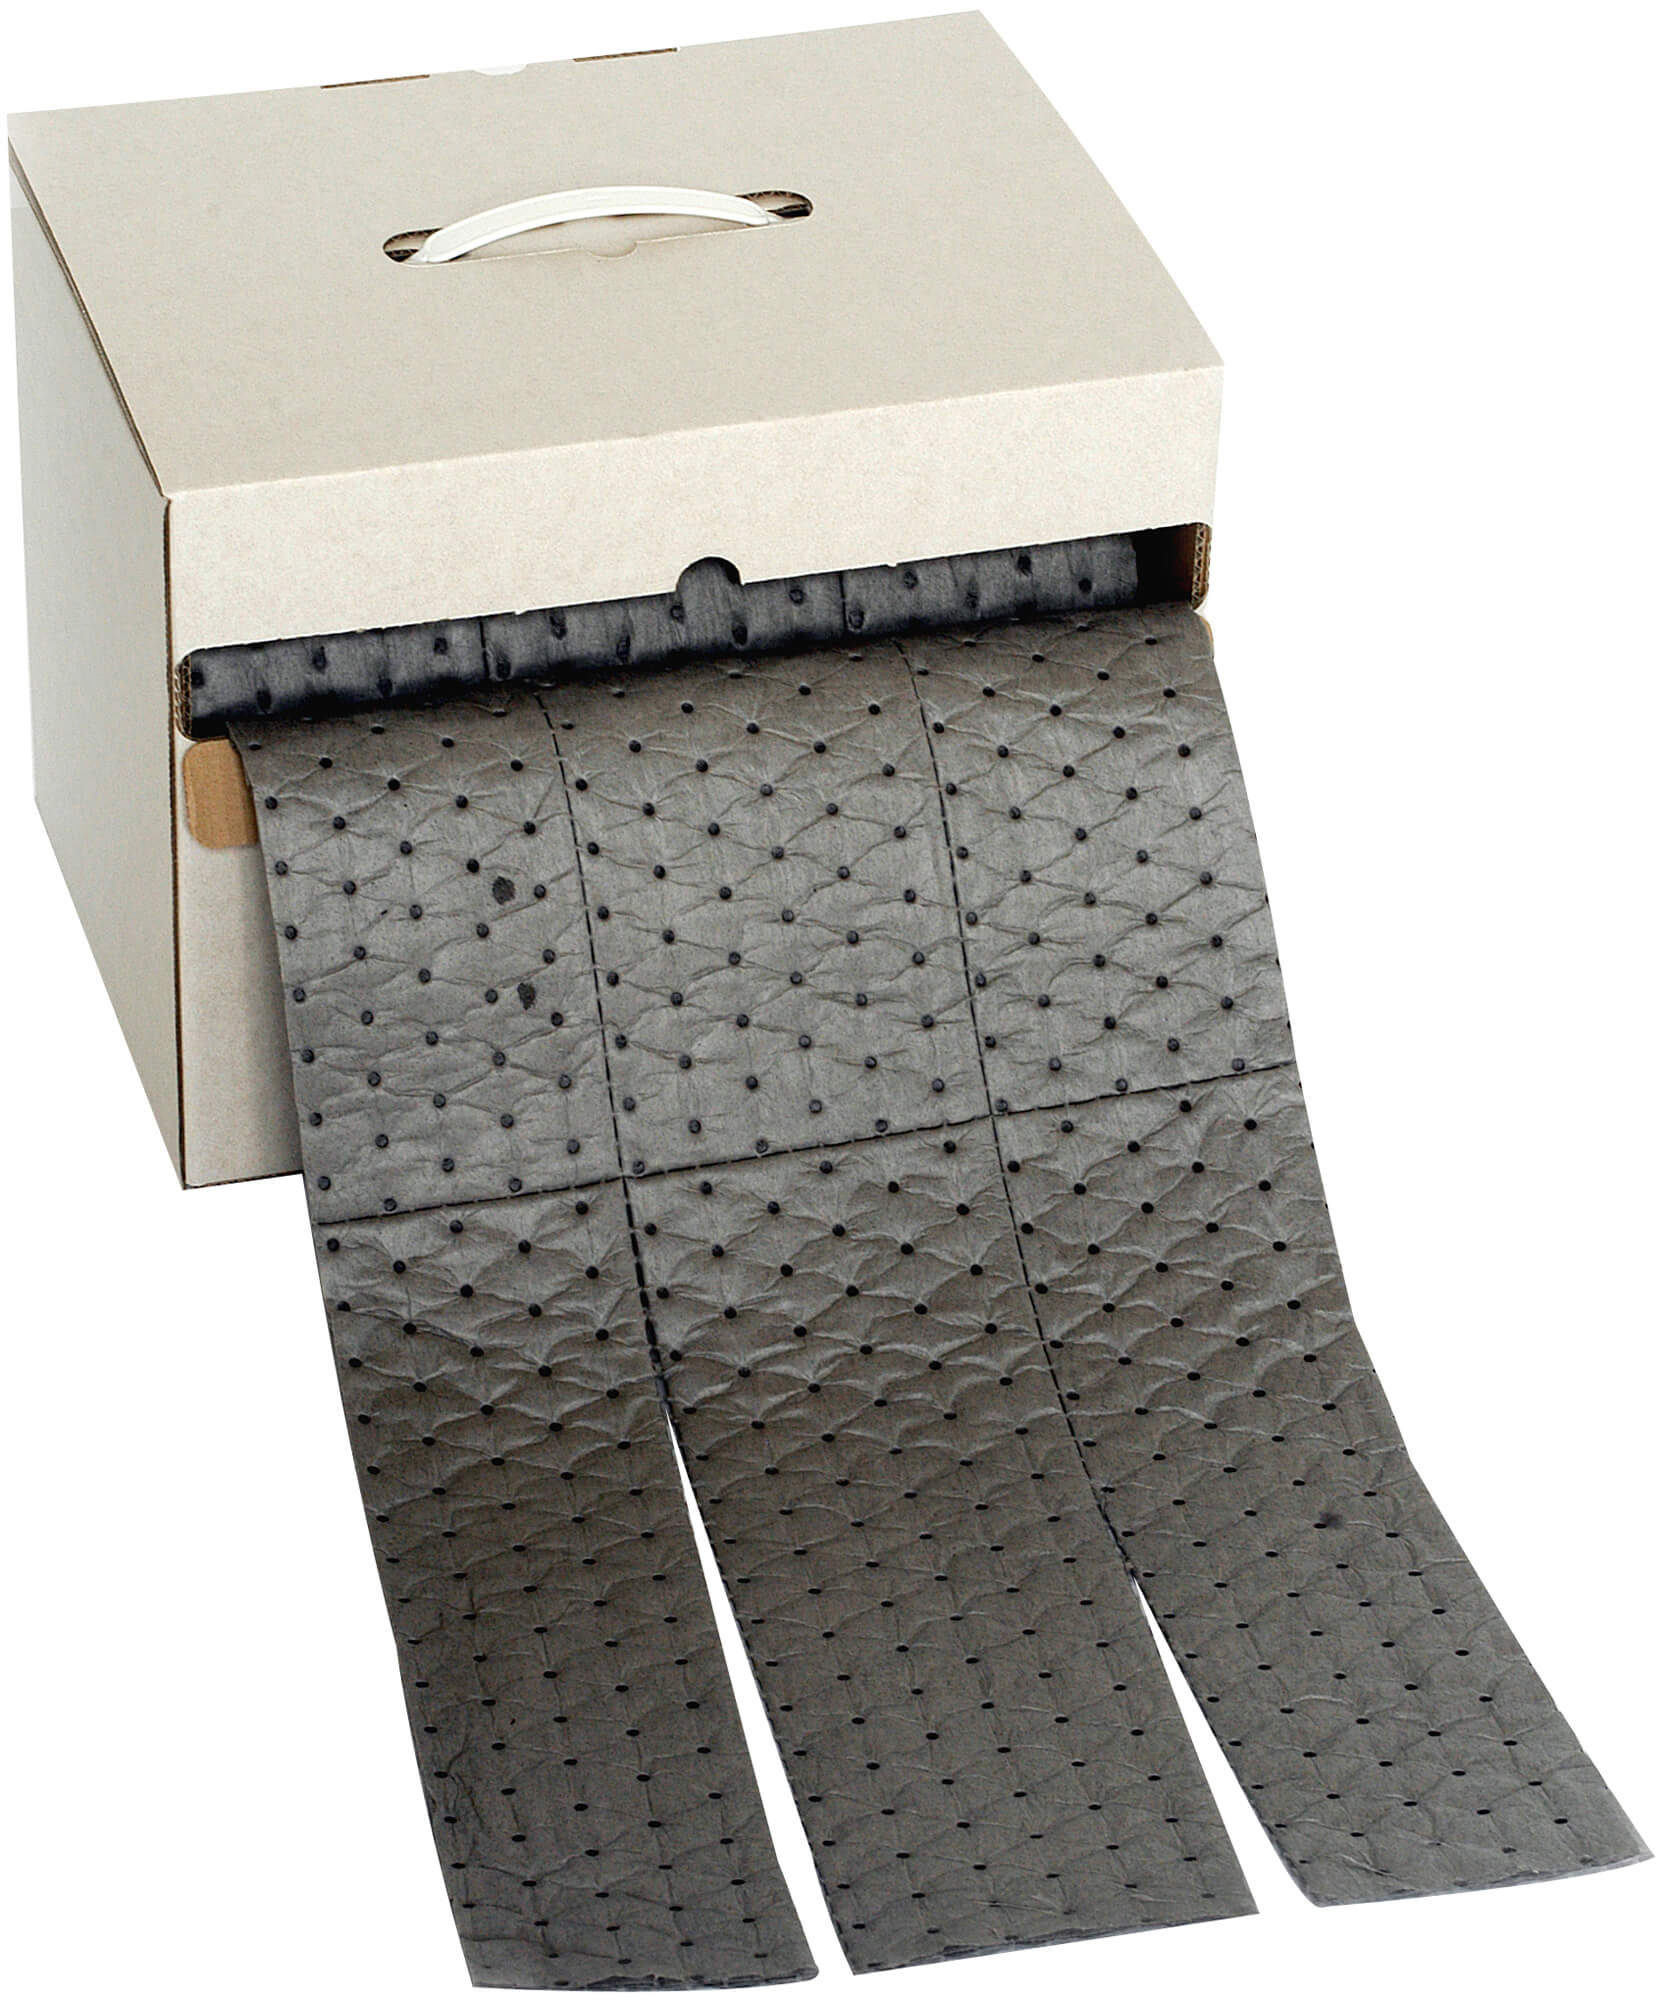 Premium Weight General Purpose Absorbent Roll 38cm x 20M, Dispenser Box 